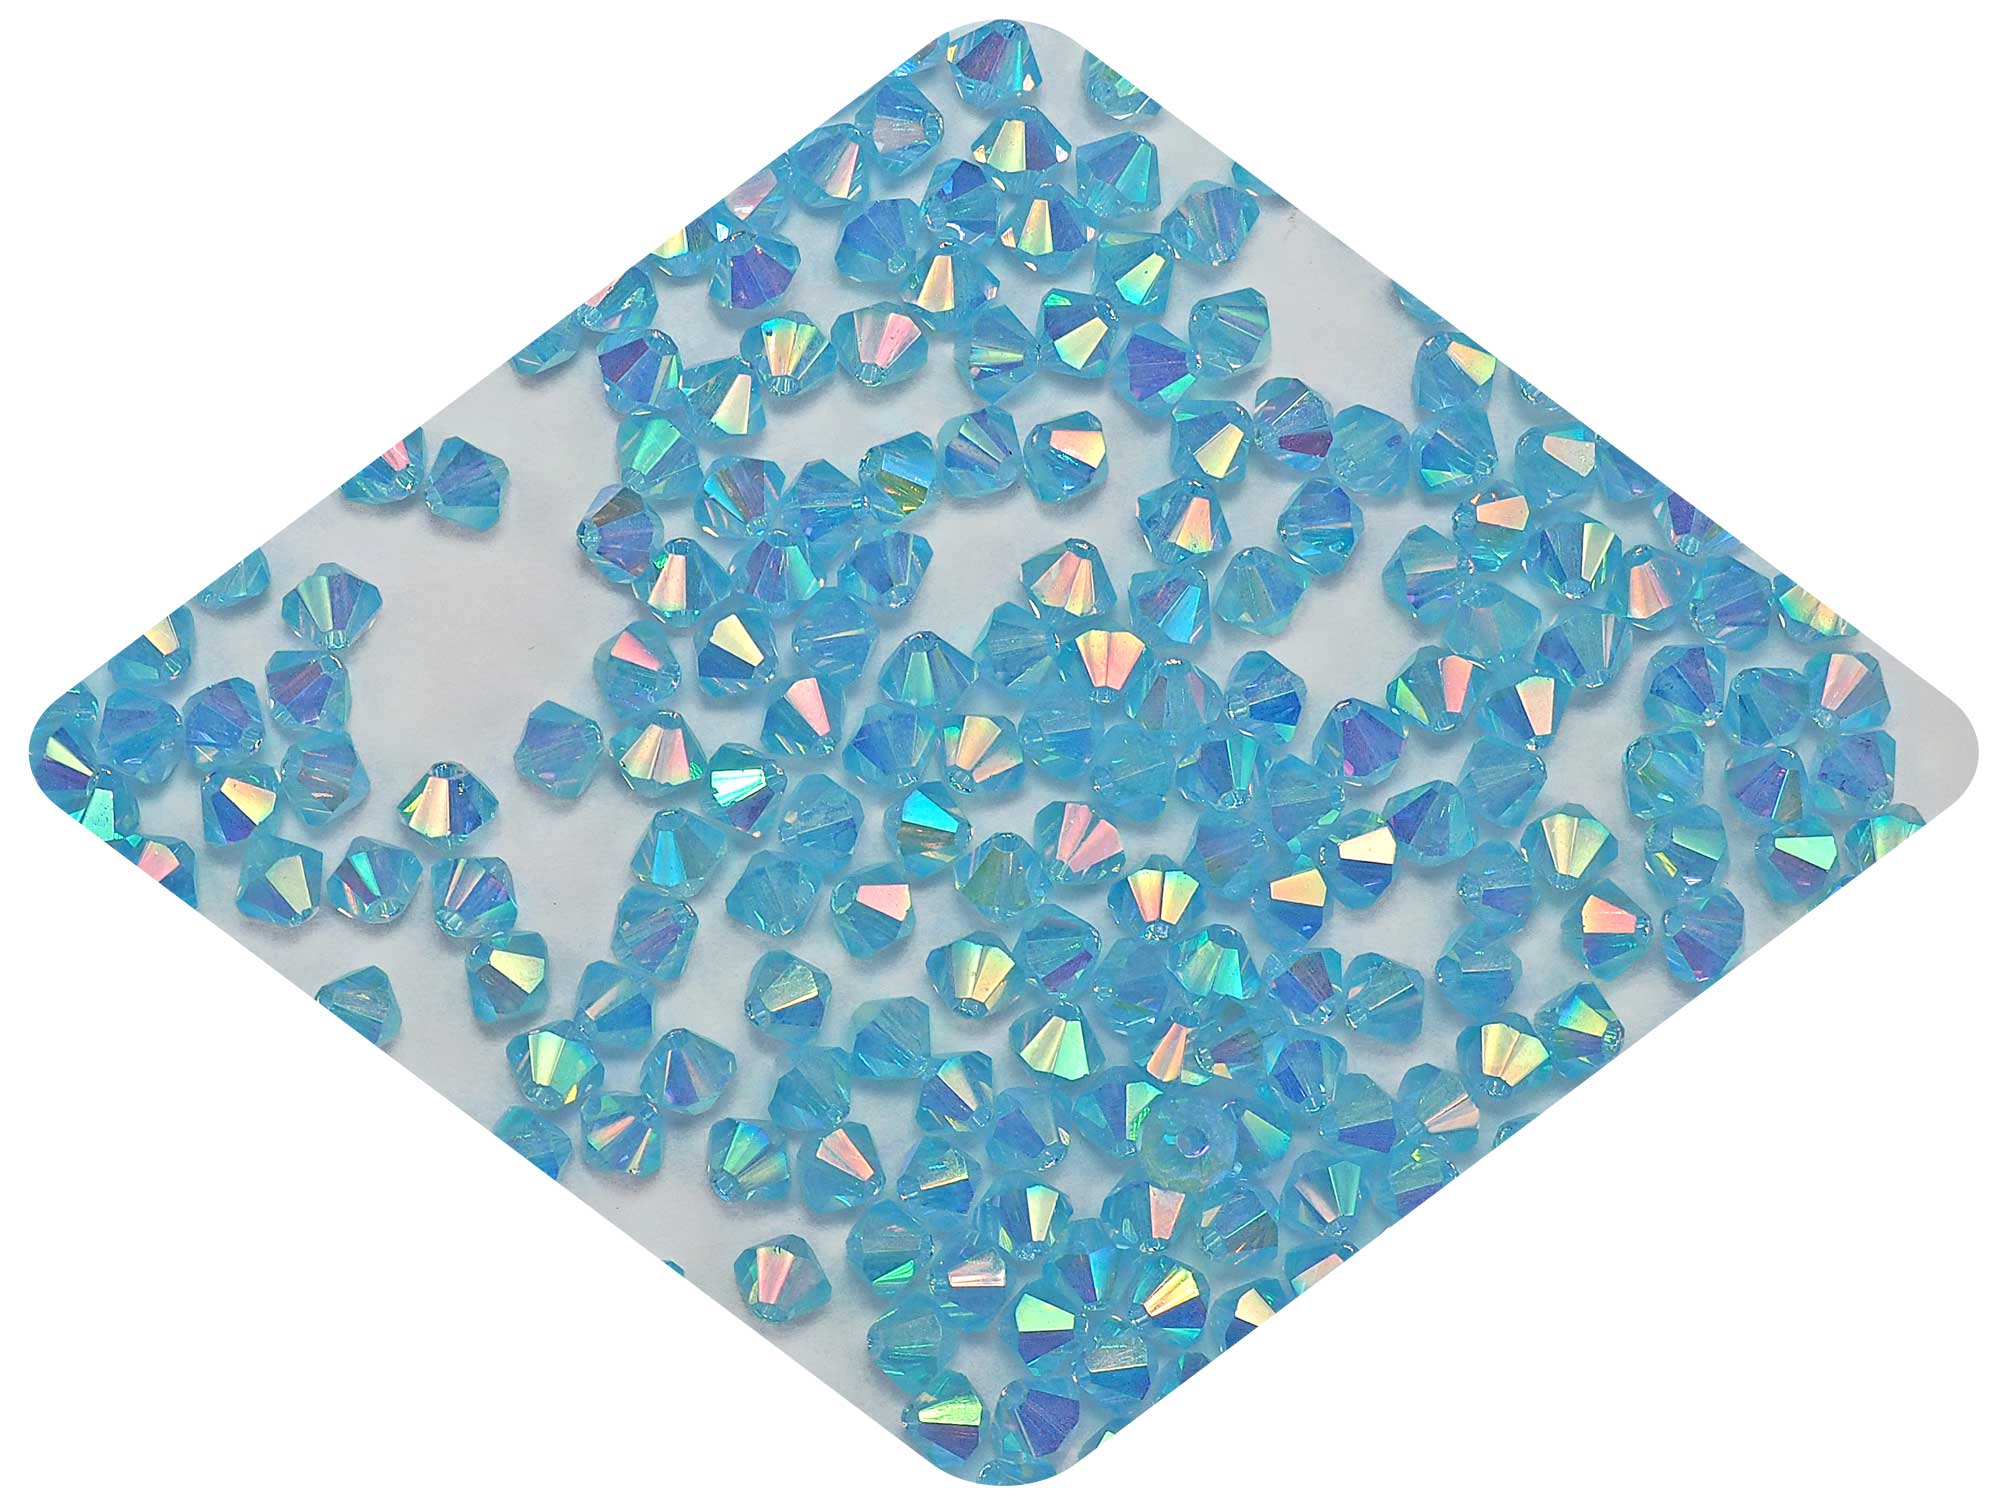 Aqua Marvel-AB, Czech Glass Beads, Machine Cut Bicones (MC Rondell, Diamond Shape), light blue crystals coated with RICH Aurora Borealis